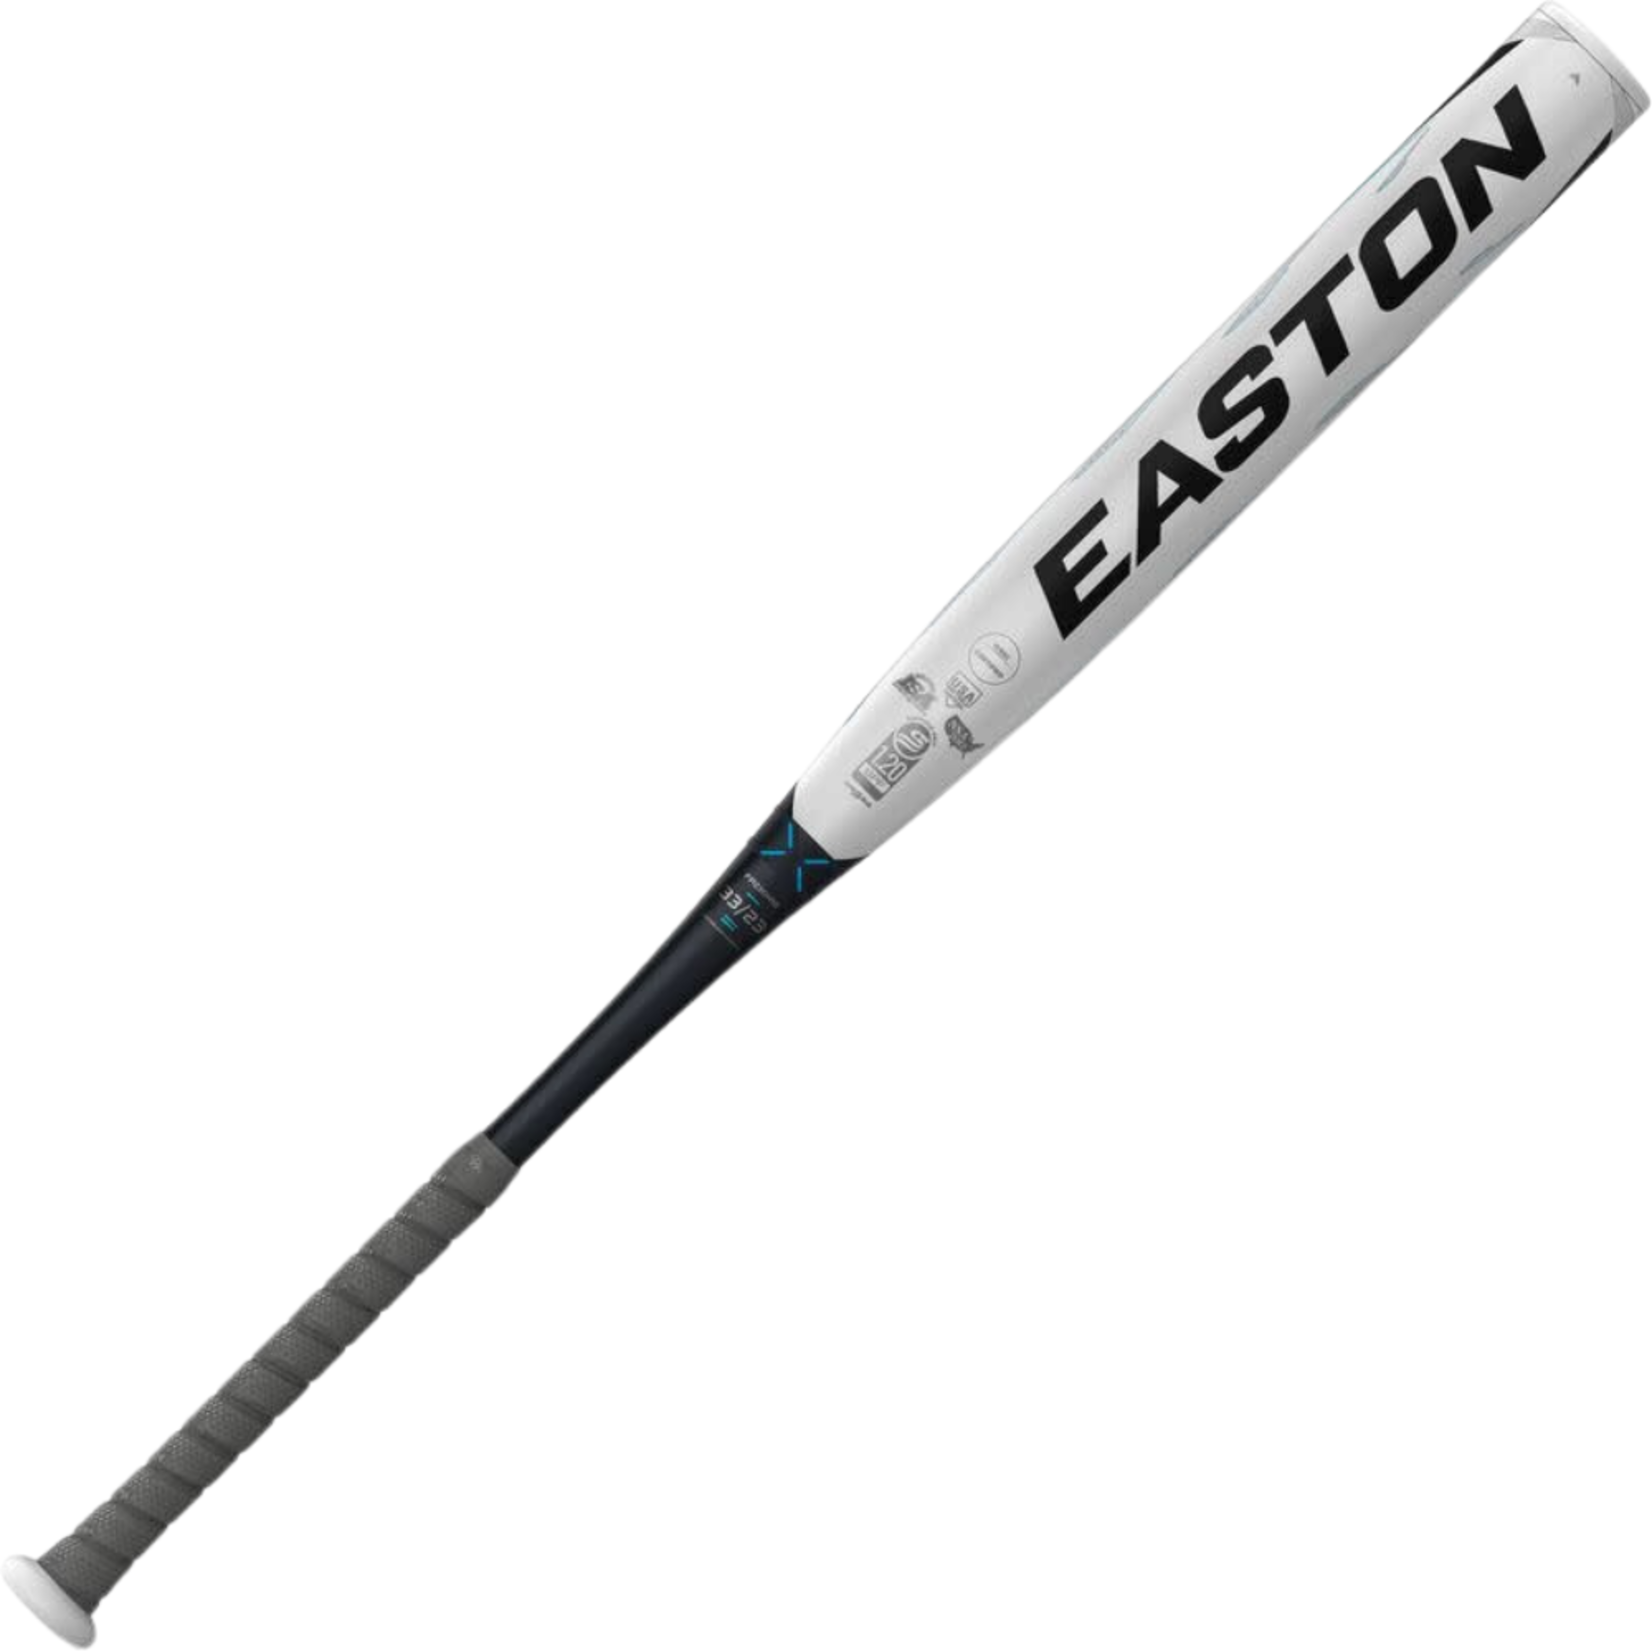 Easton Easton Baseball Bat, Ghost Double Barrel, FP23GH10, Fastpitch, -10